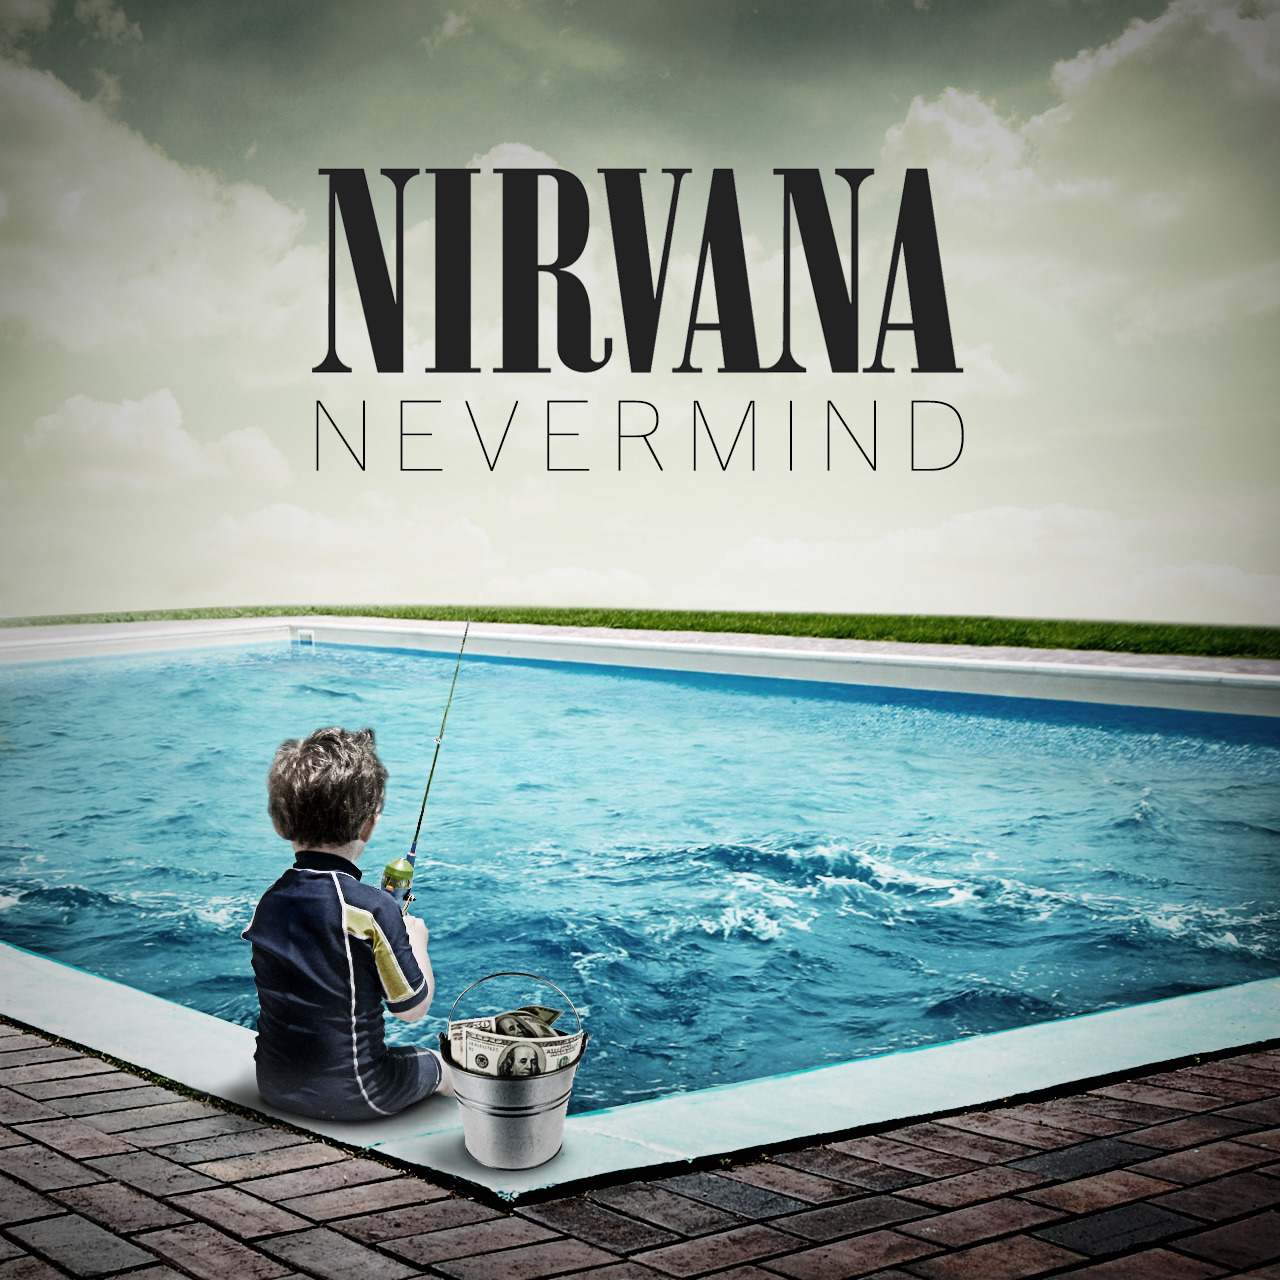 nirvana debut album